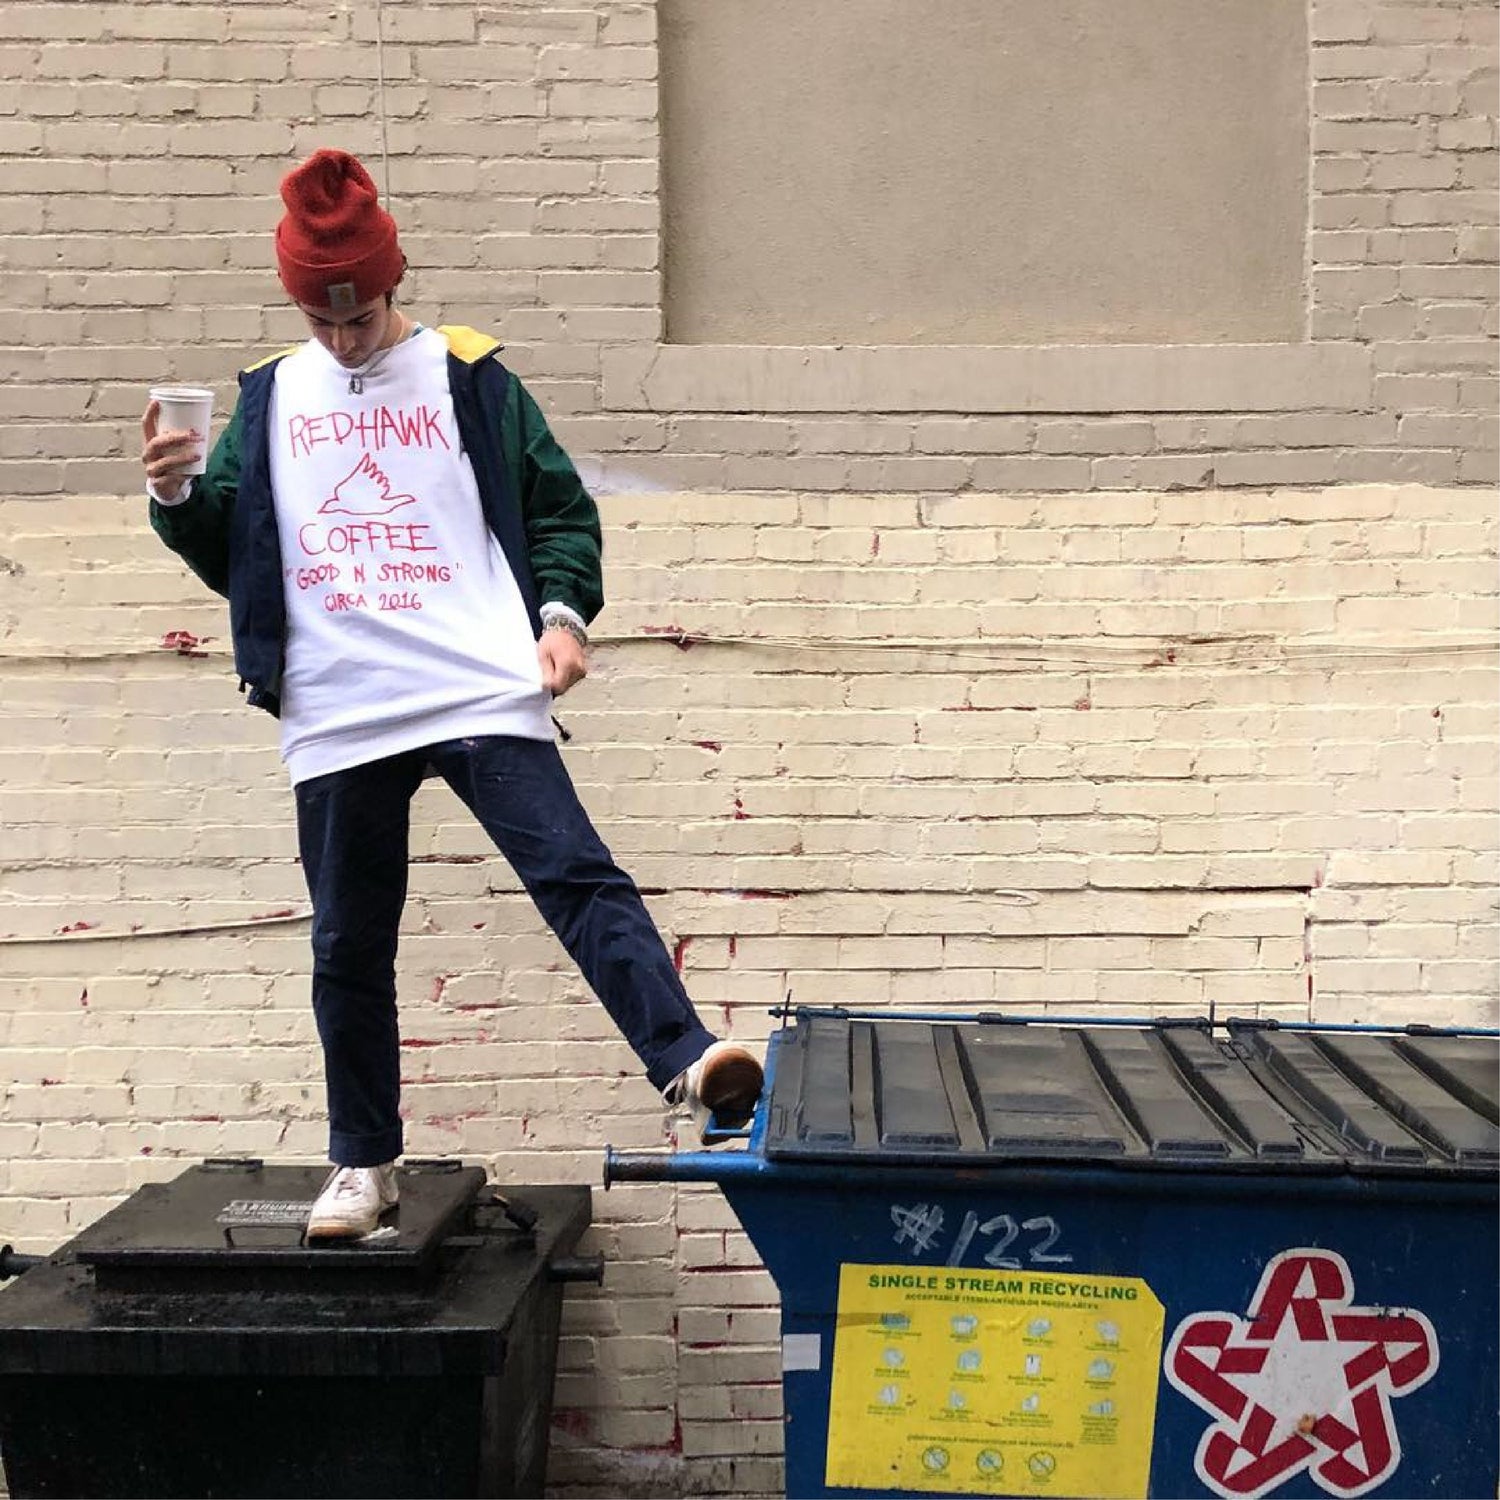 Redhawk coffee "Good N Strong" Circa 2016 shirt on Lorenzo on Dumpsters